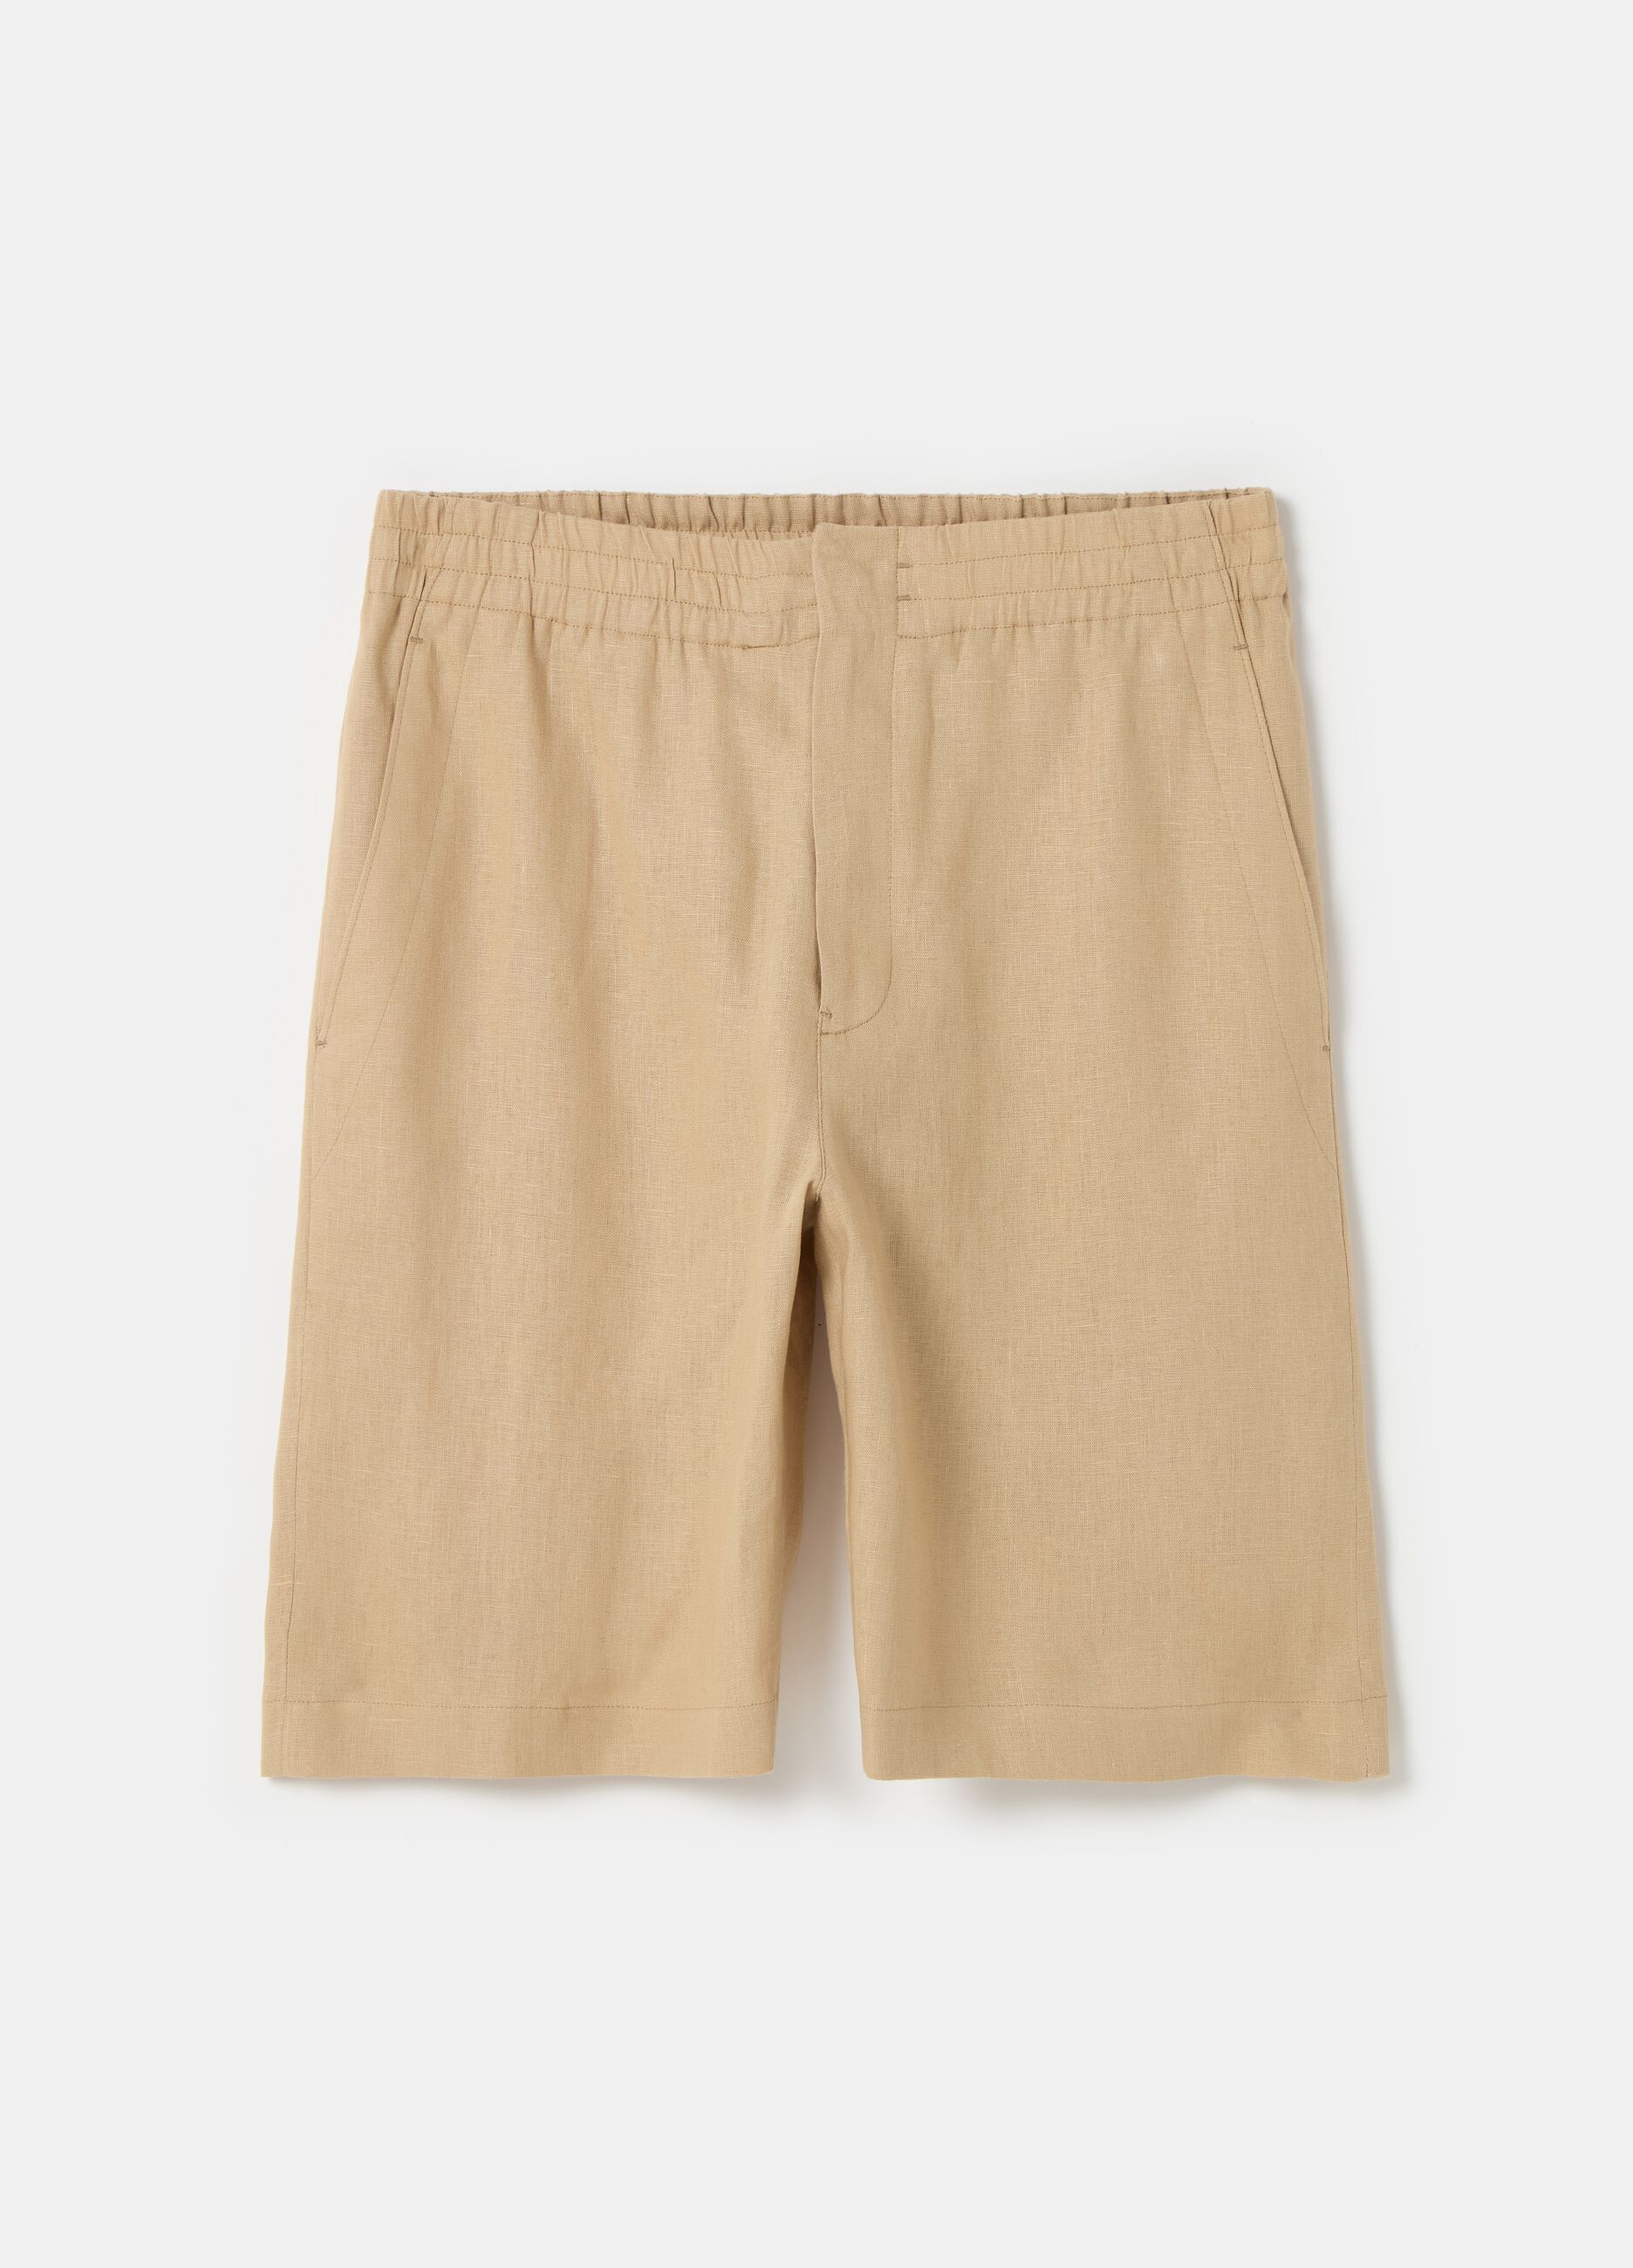 Contemporary Bermuda shorts in linen_3